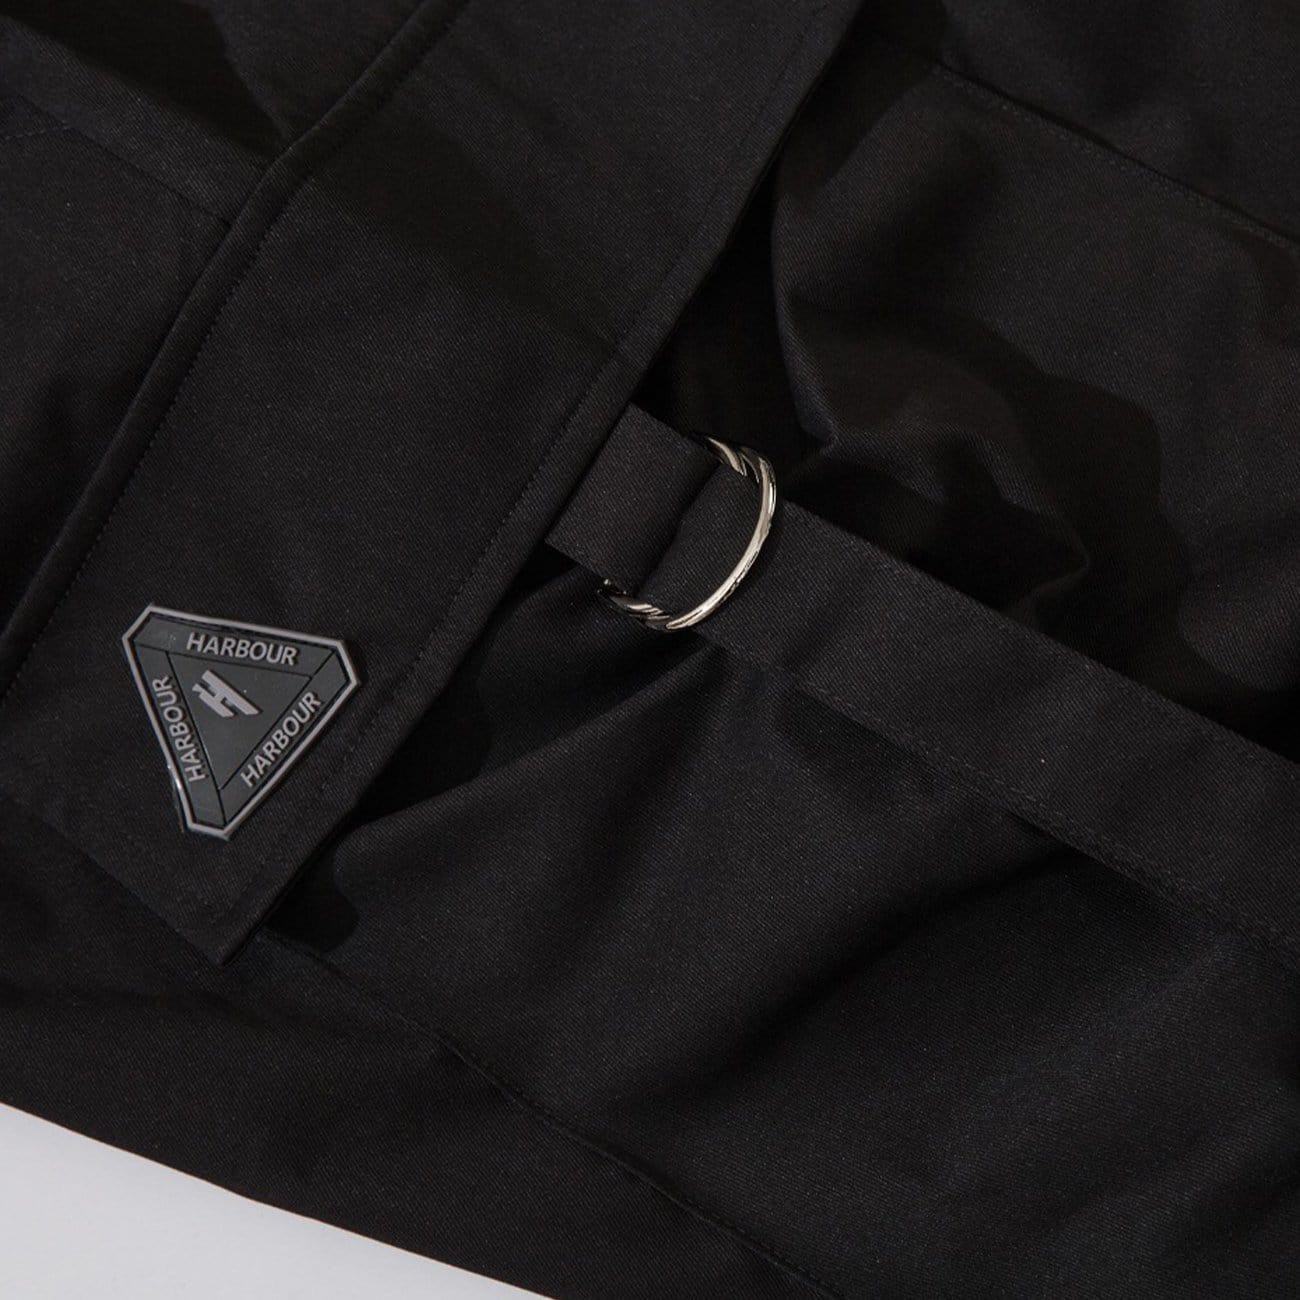 Pull Ring Streamer Shorts Streetwear Brand Techwear Combat Tactical YUGEN THEORY